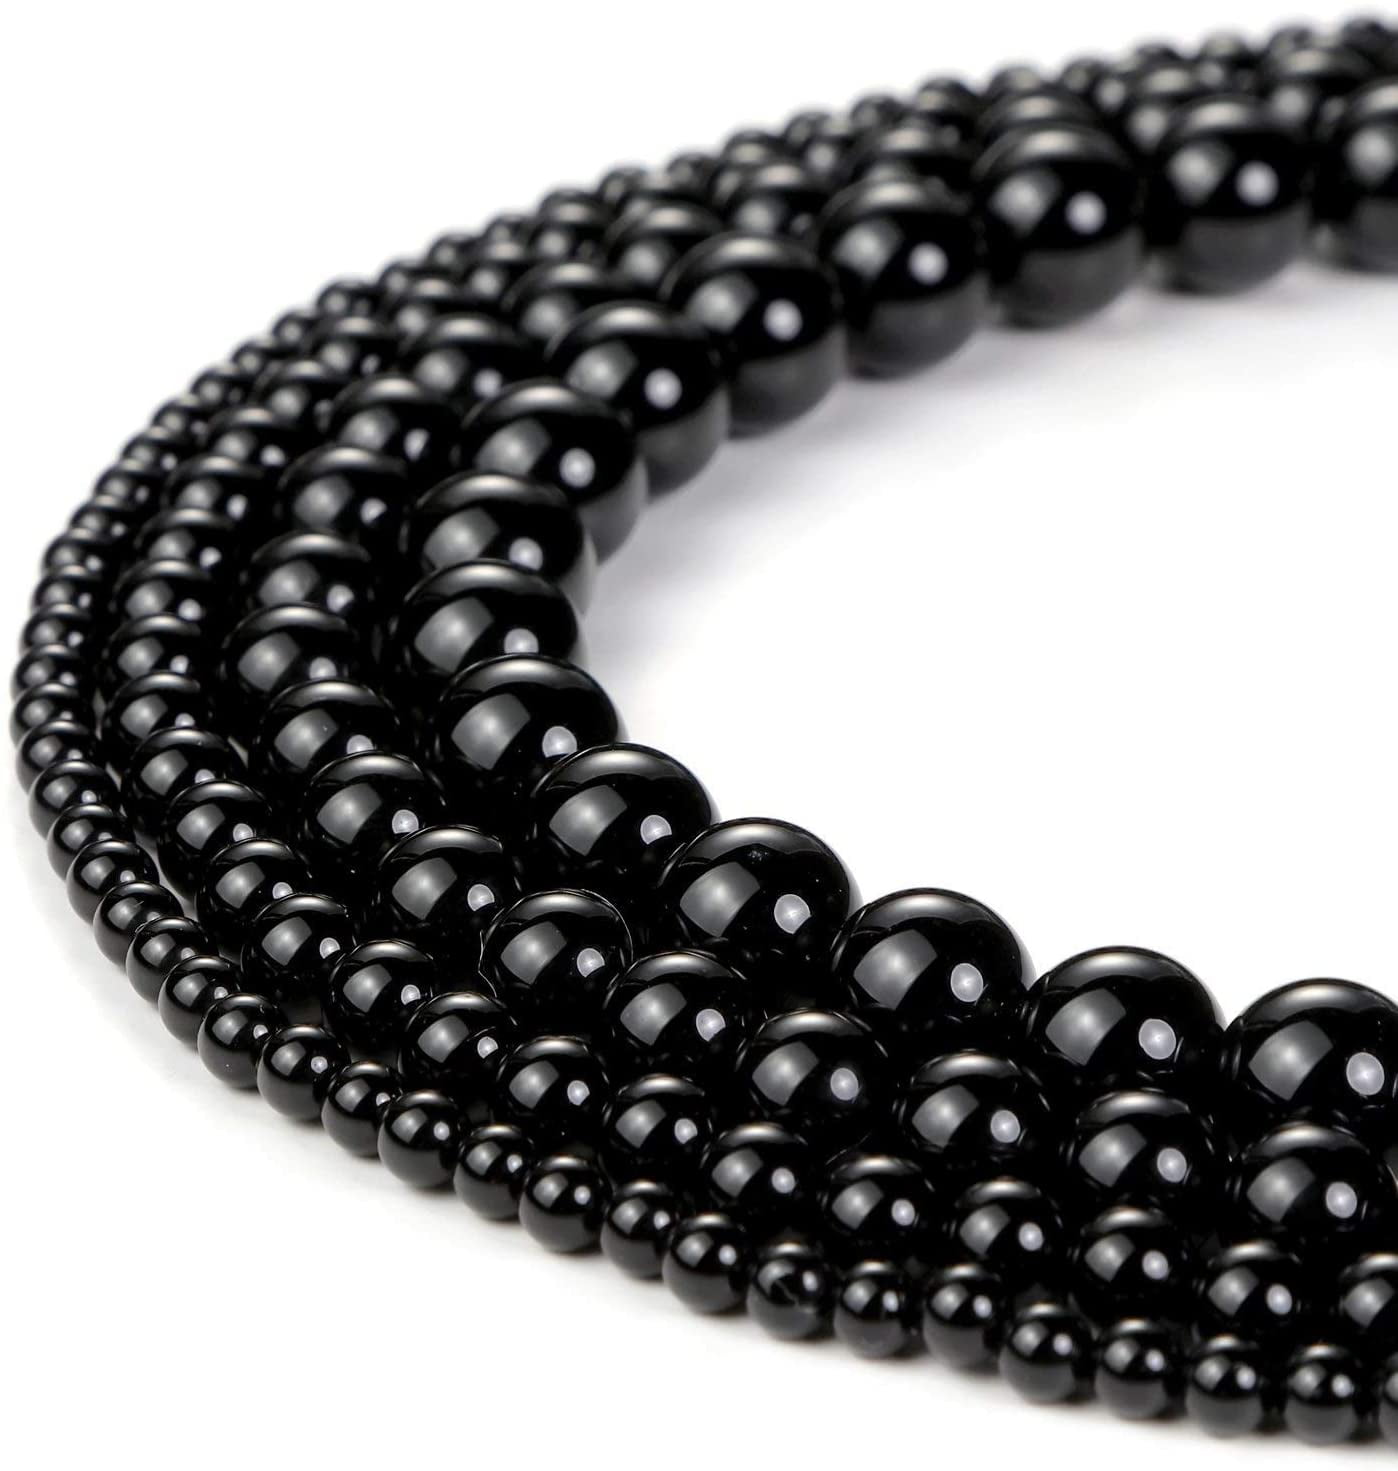 Natural Gemstone Black Onyx Agate Heart Love Beads For Jewelry Making Strand 15" 